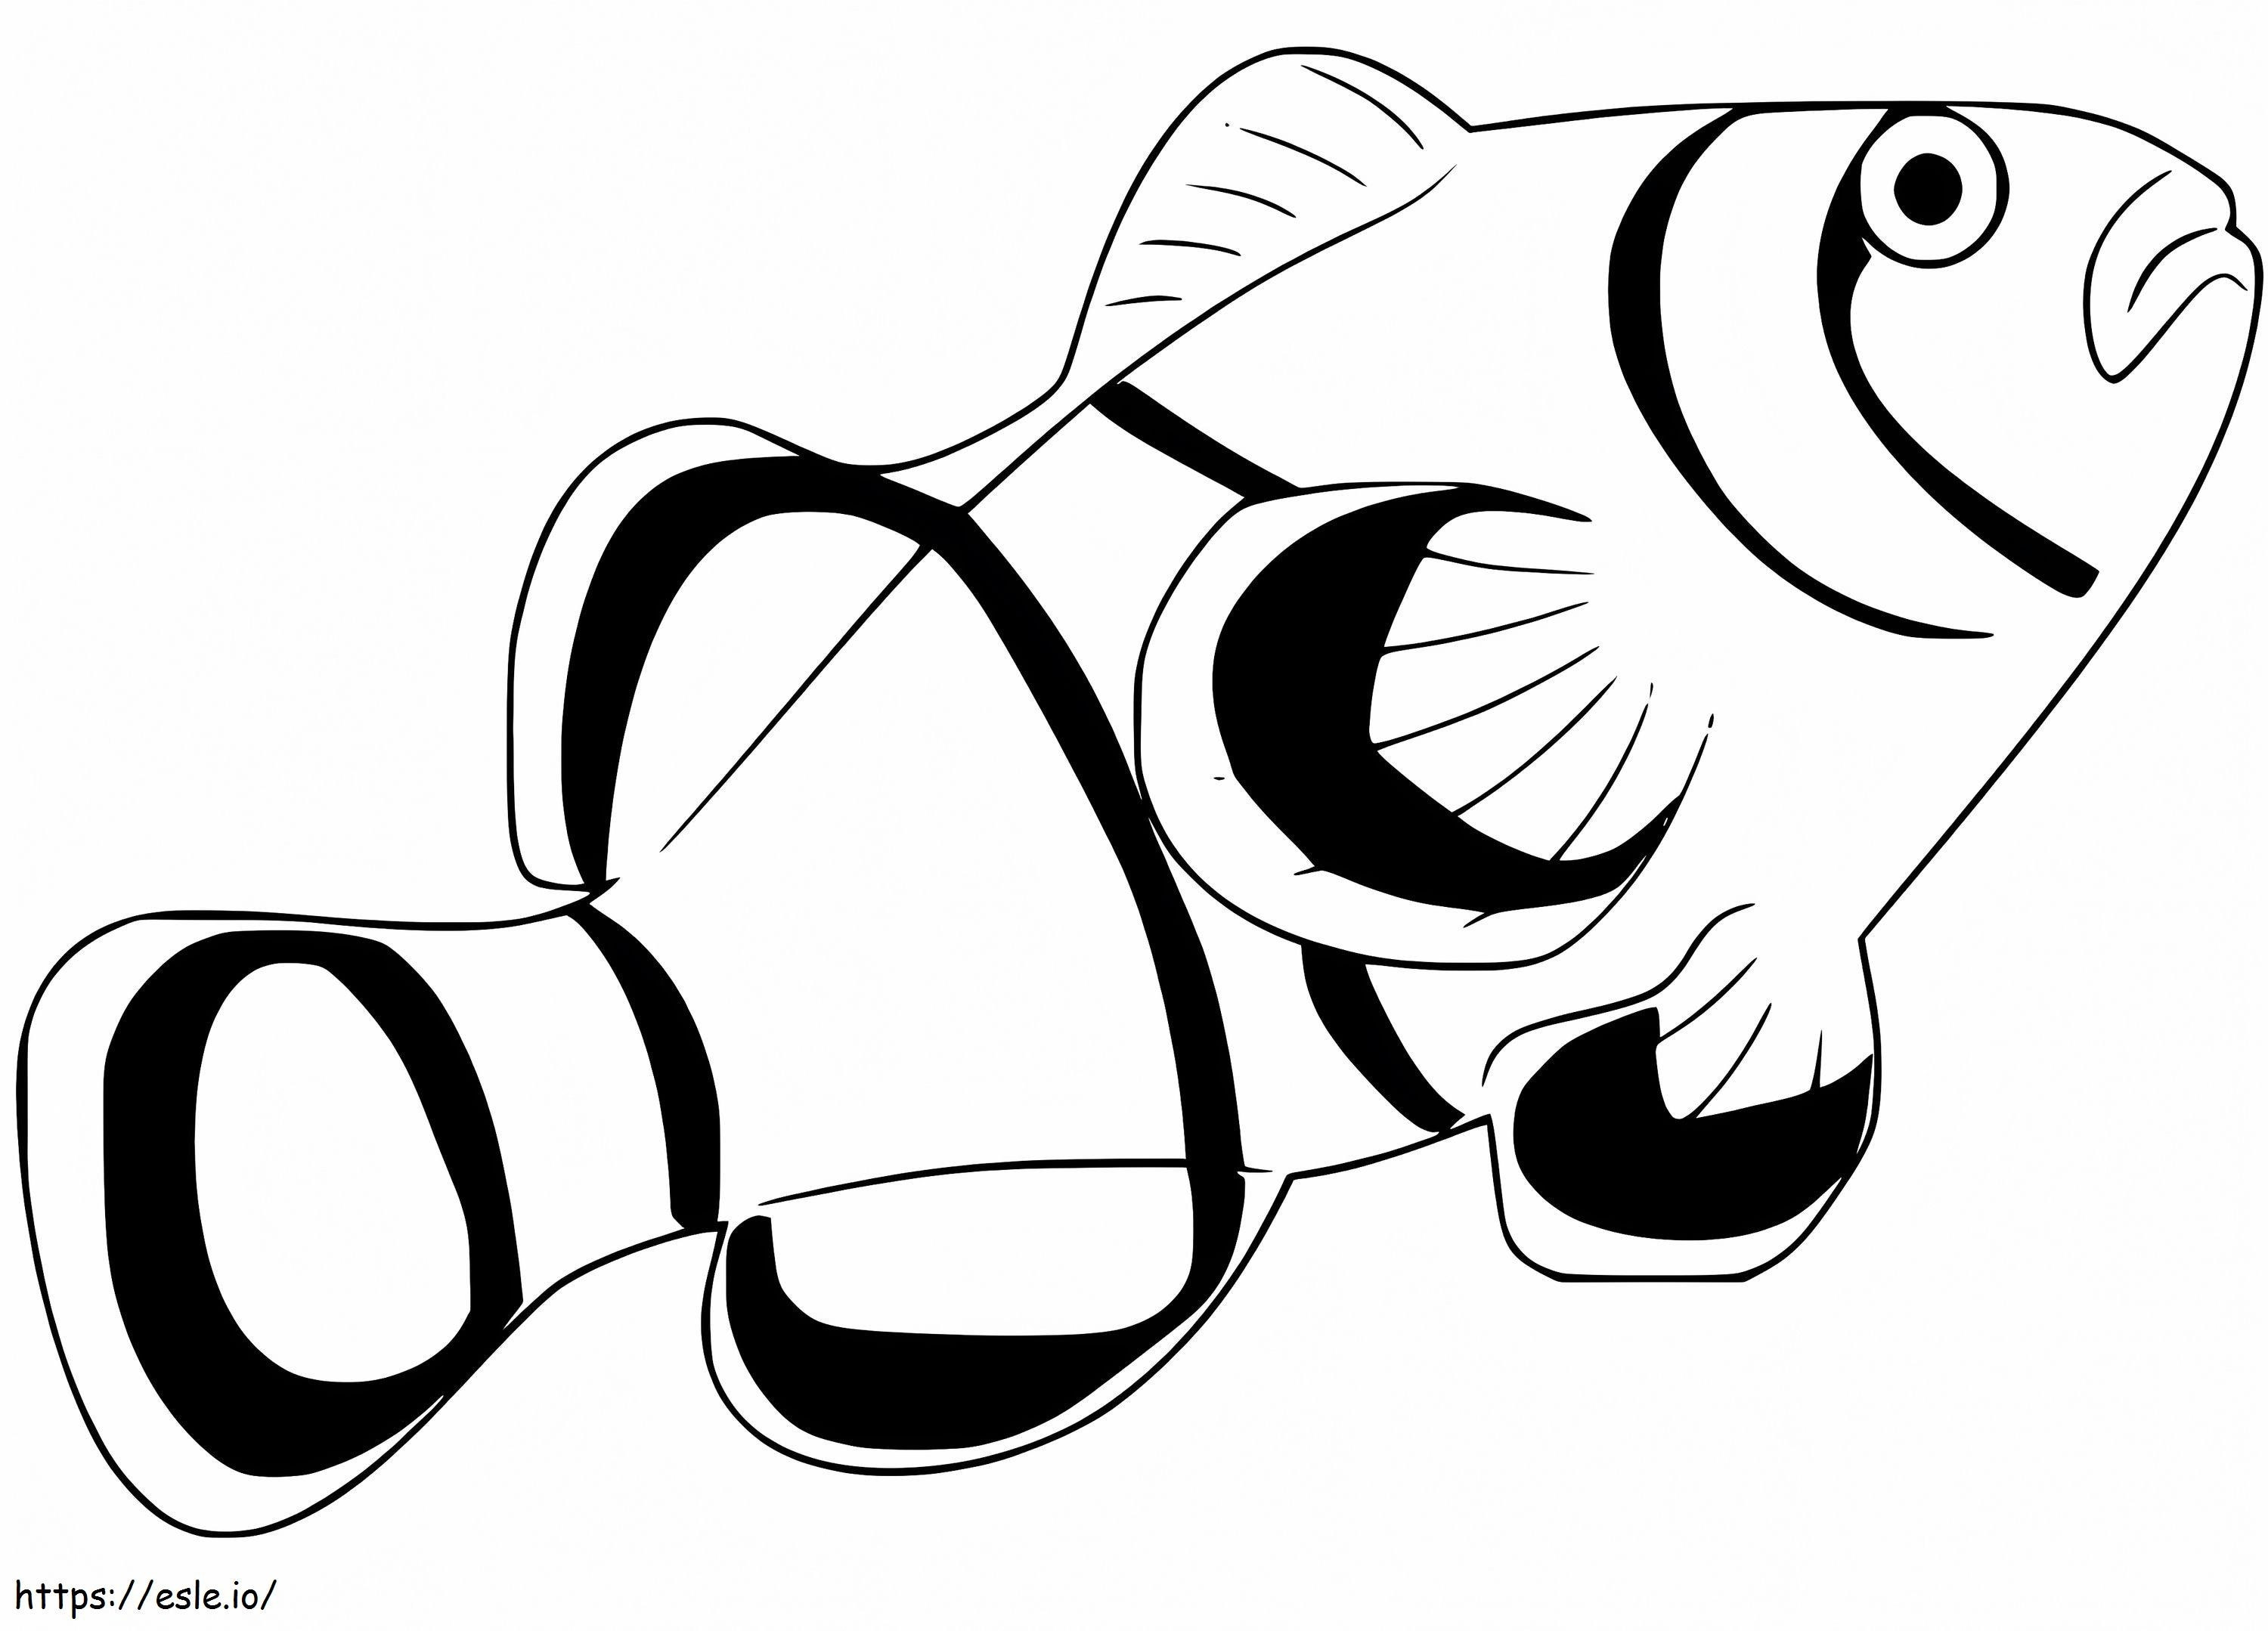 Peixe-palhaço imprimível para colorir